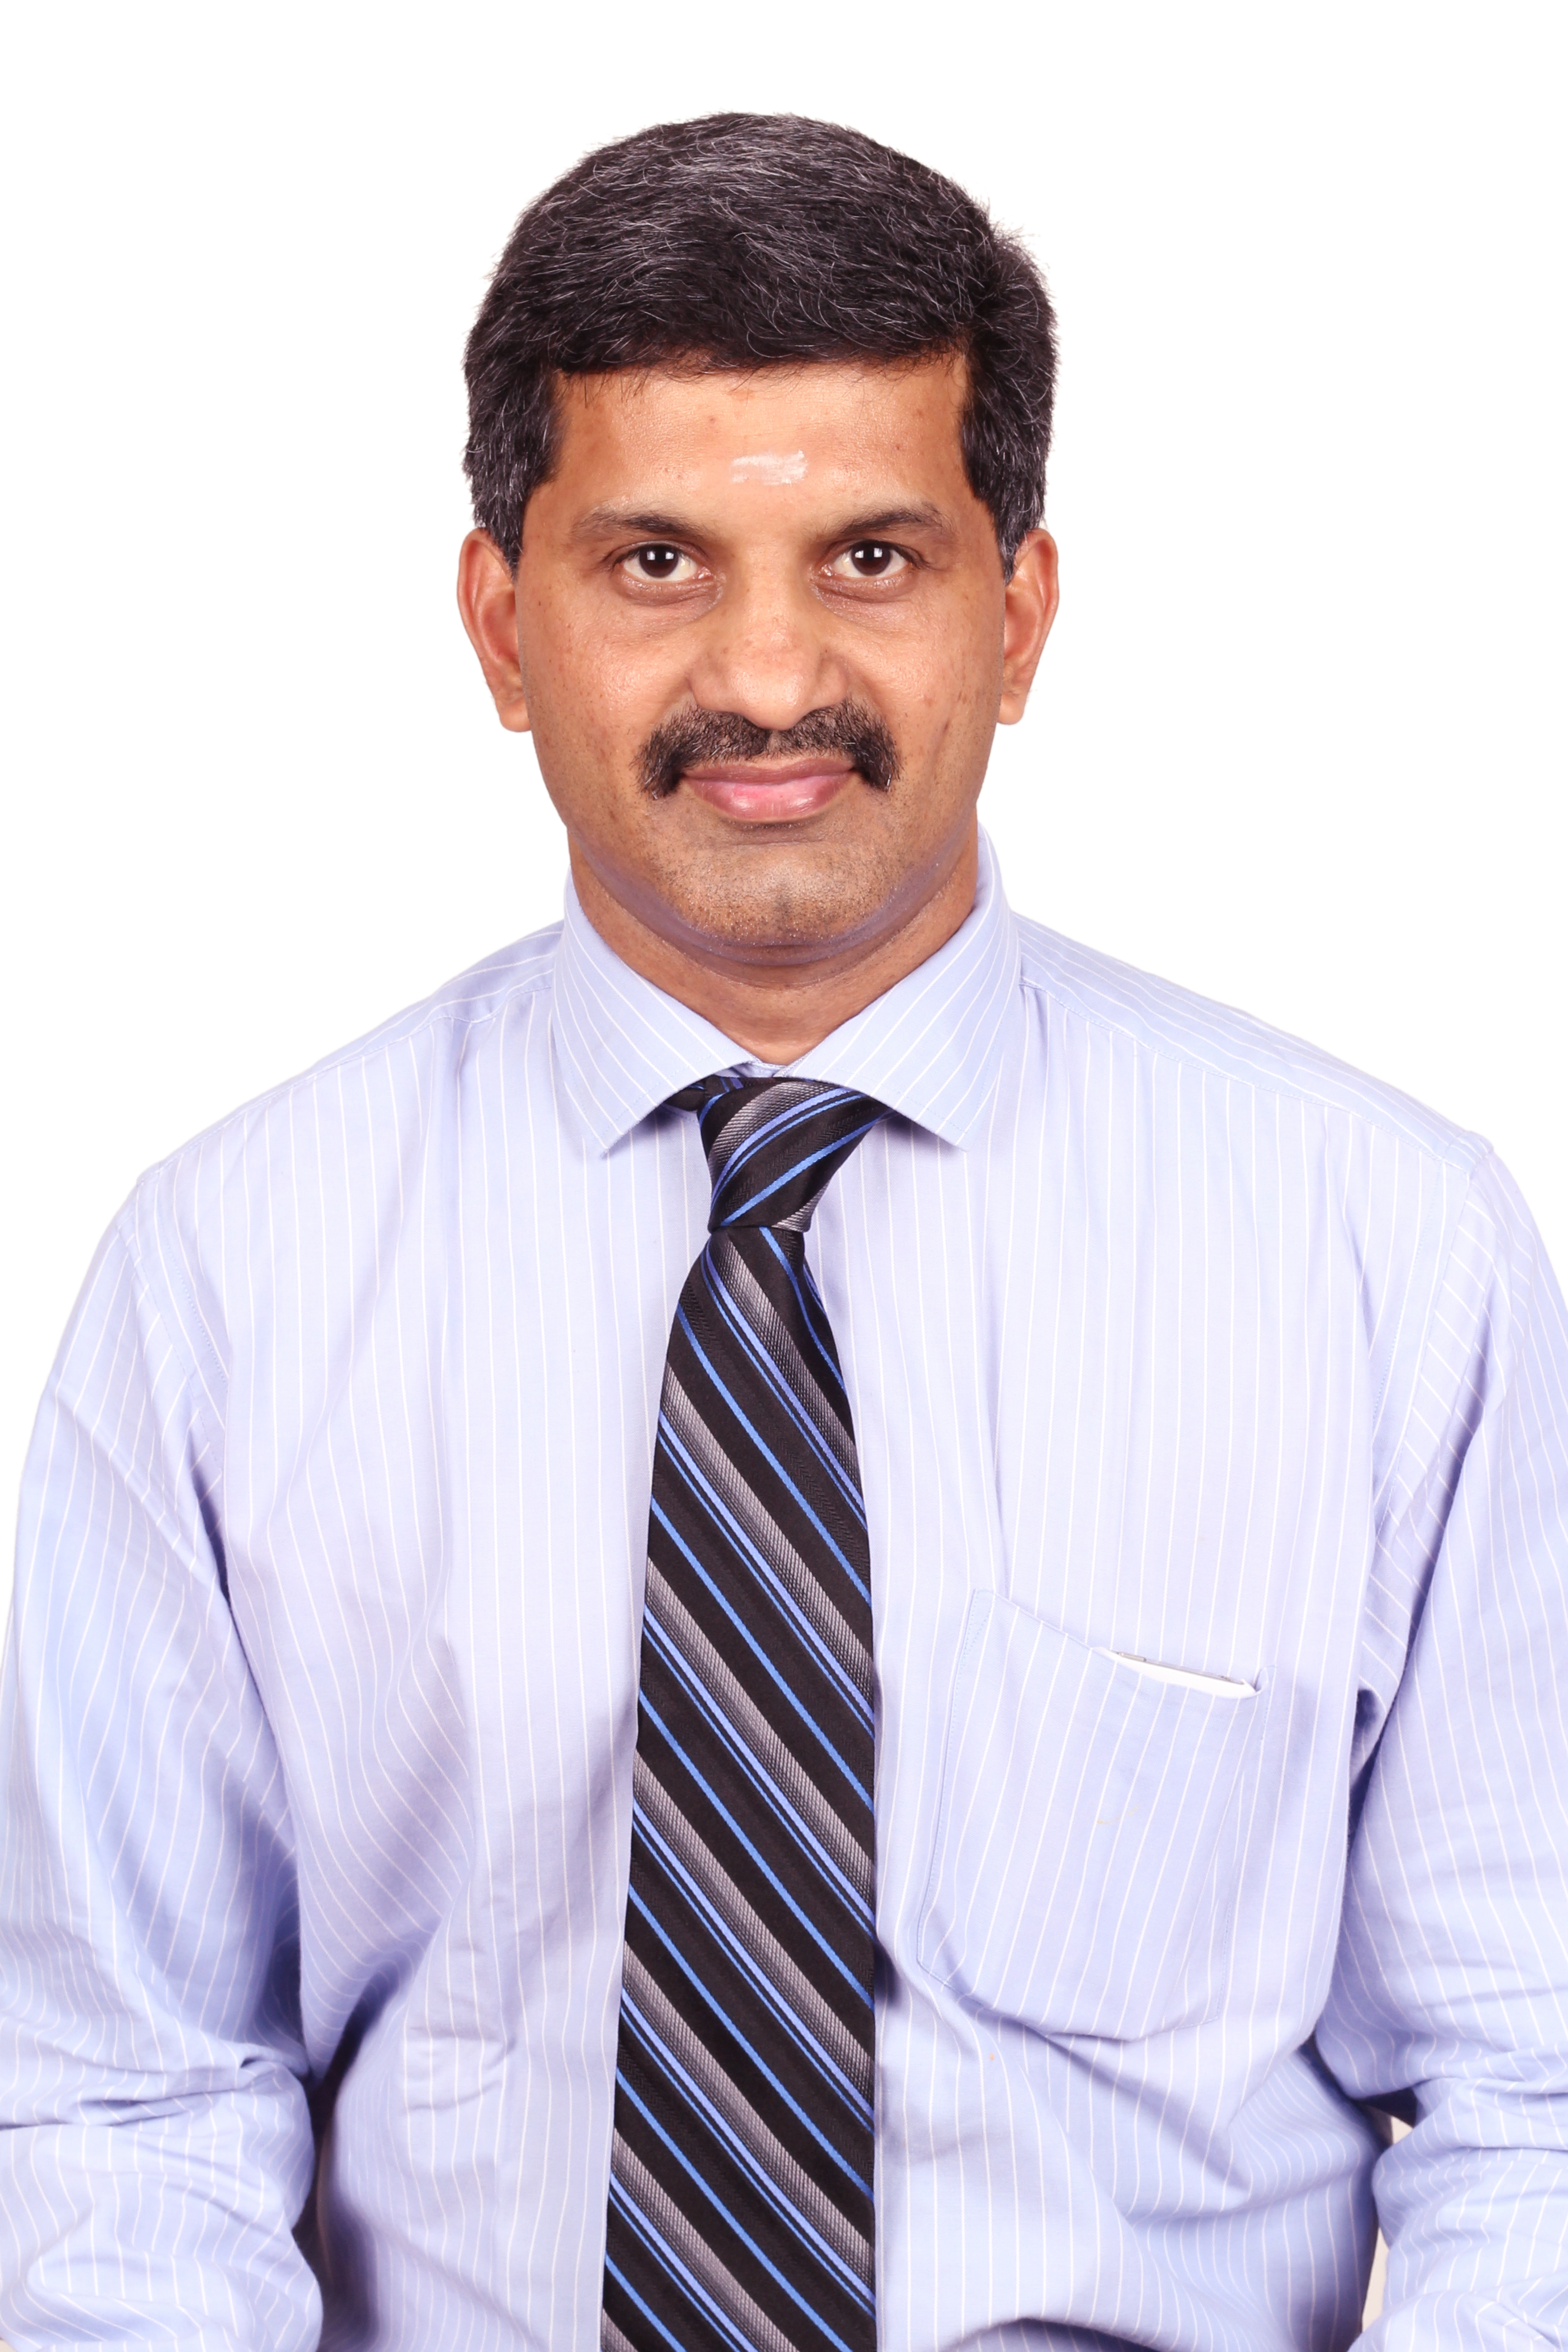  Dr. Madhusudan Krishnan